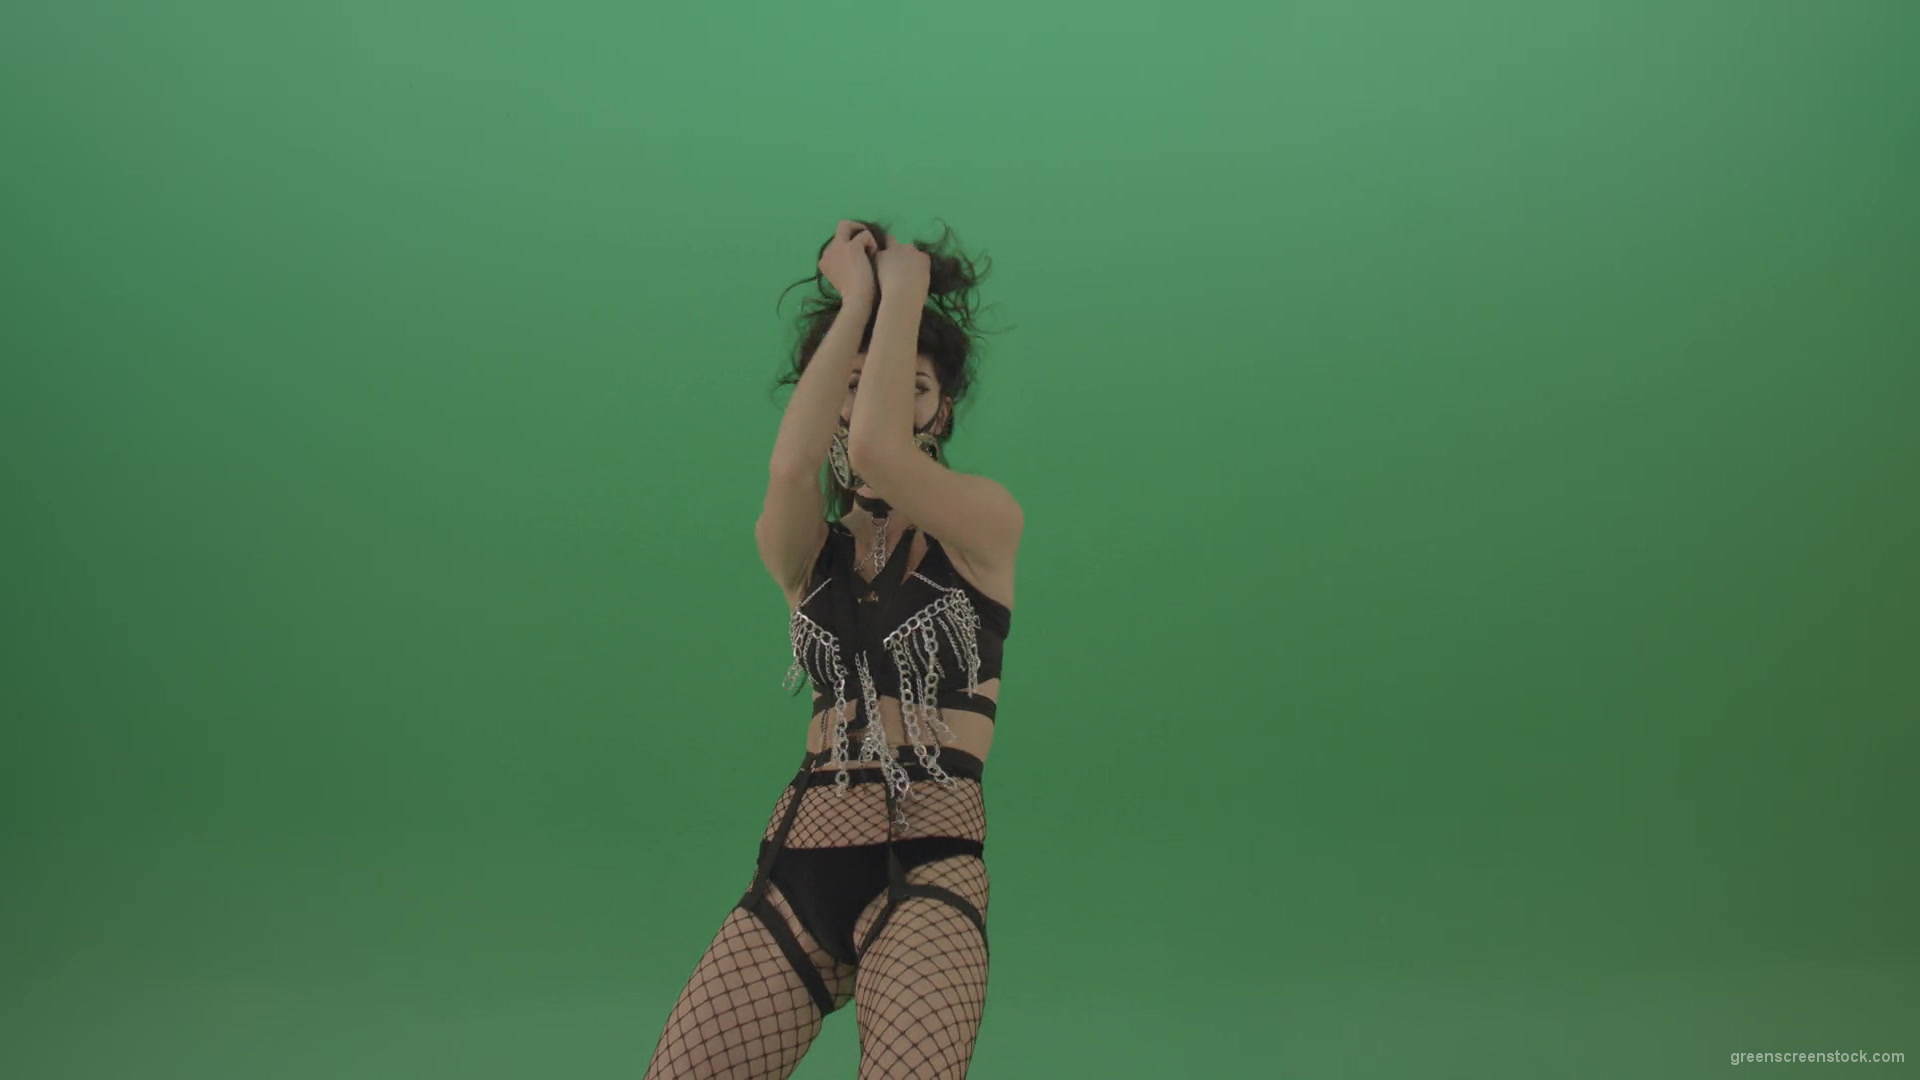 Sexy-dancing-Go-Go-PJ-Girl-in-black-fetish-suite-on-chroma-key-1920_007 Green Screen Stock